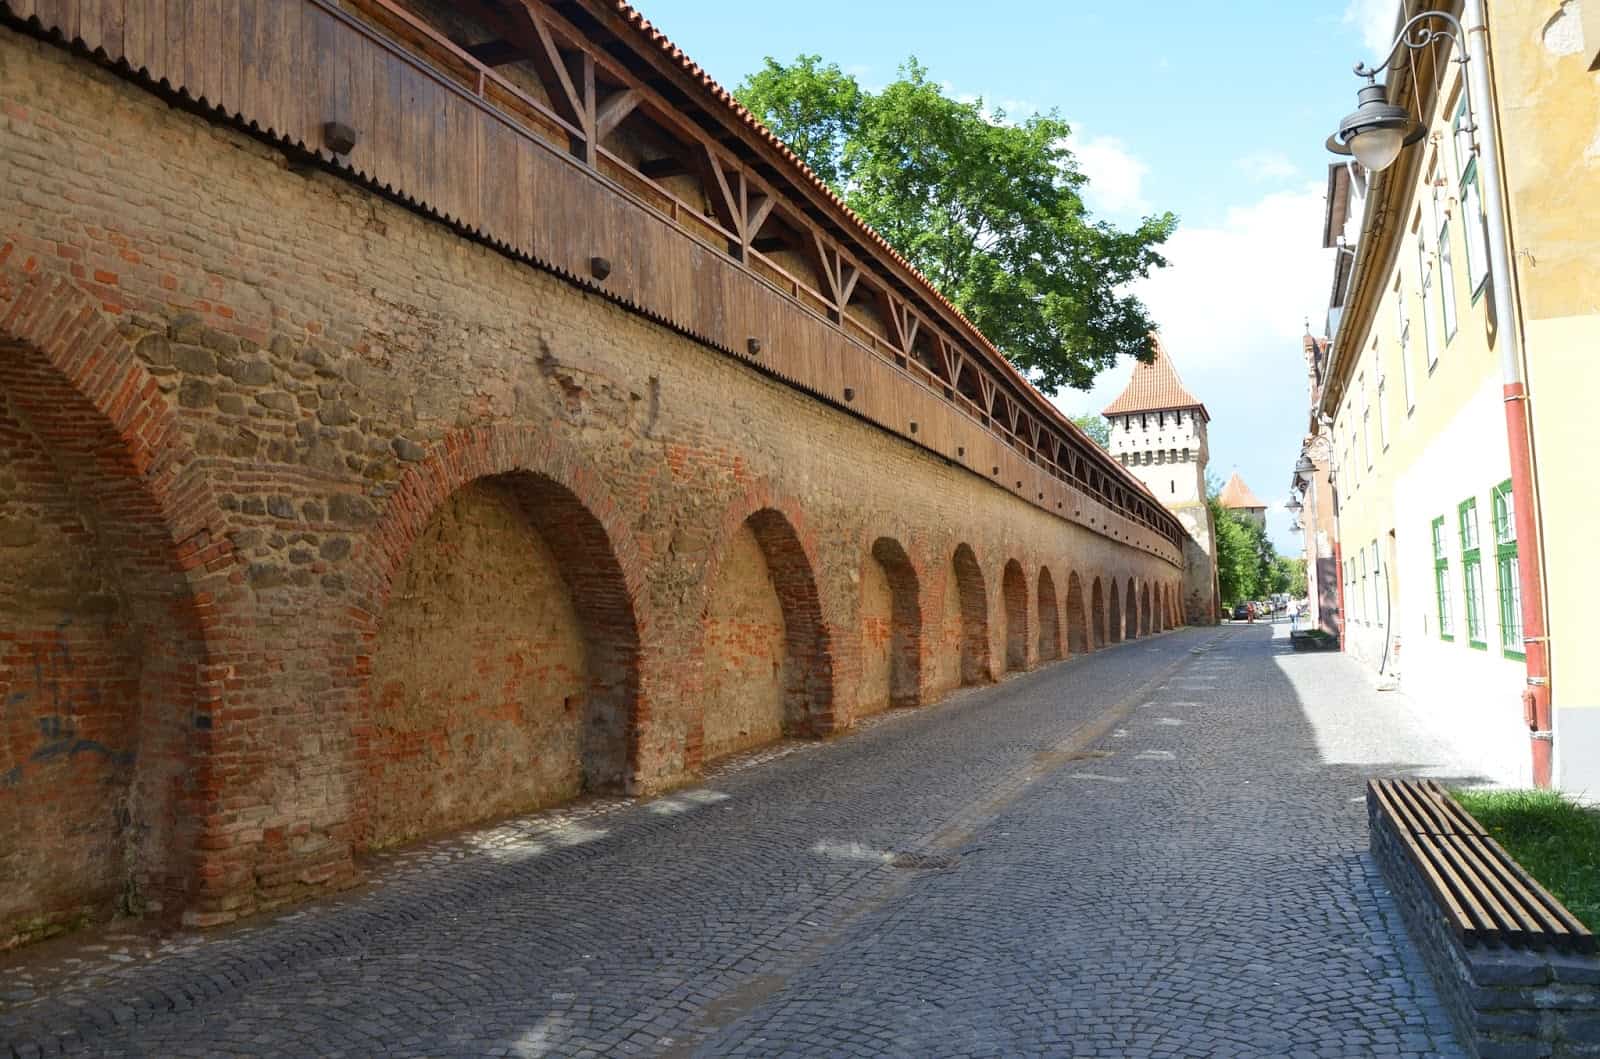 City walls along the street in Sibiu, Romania